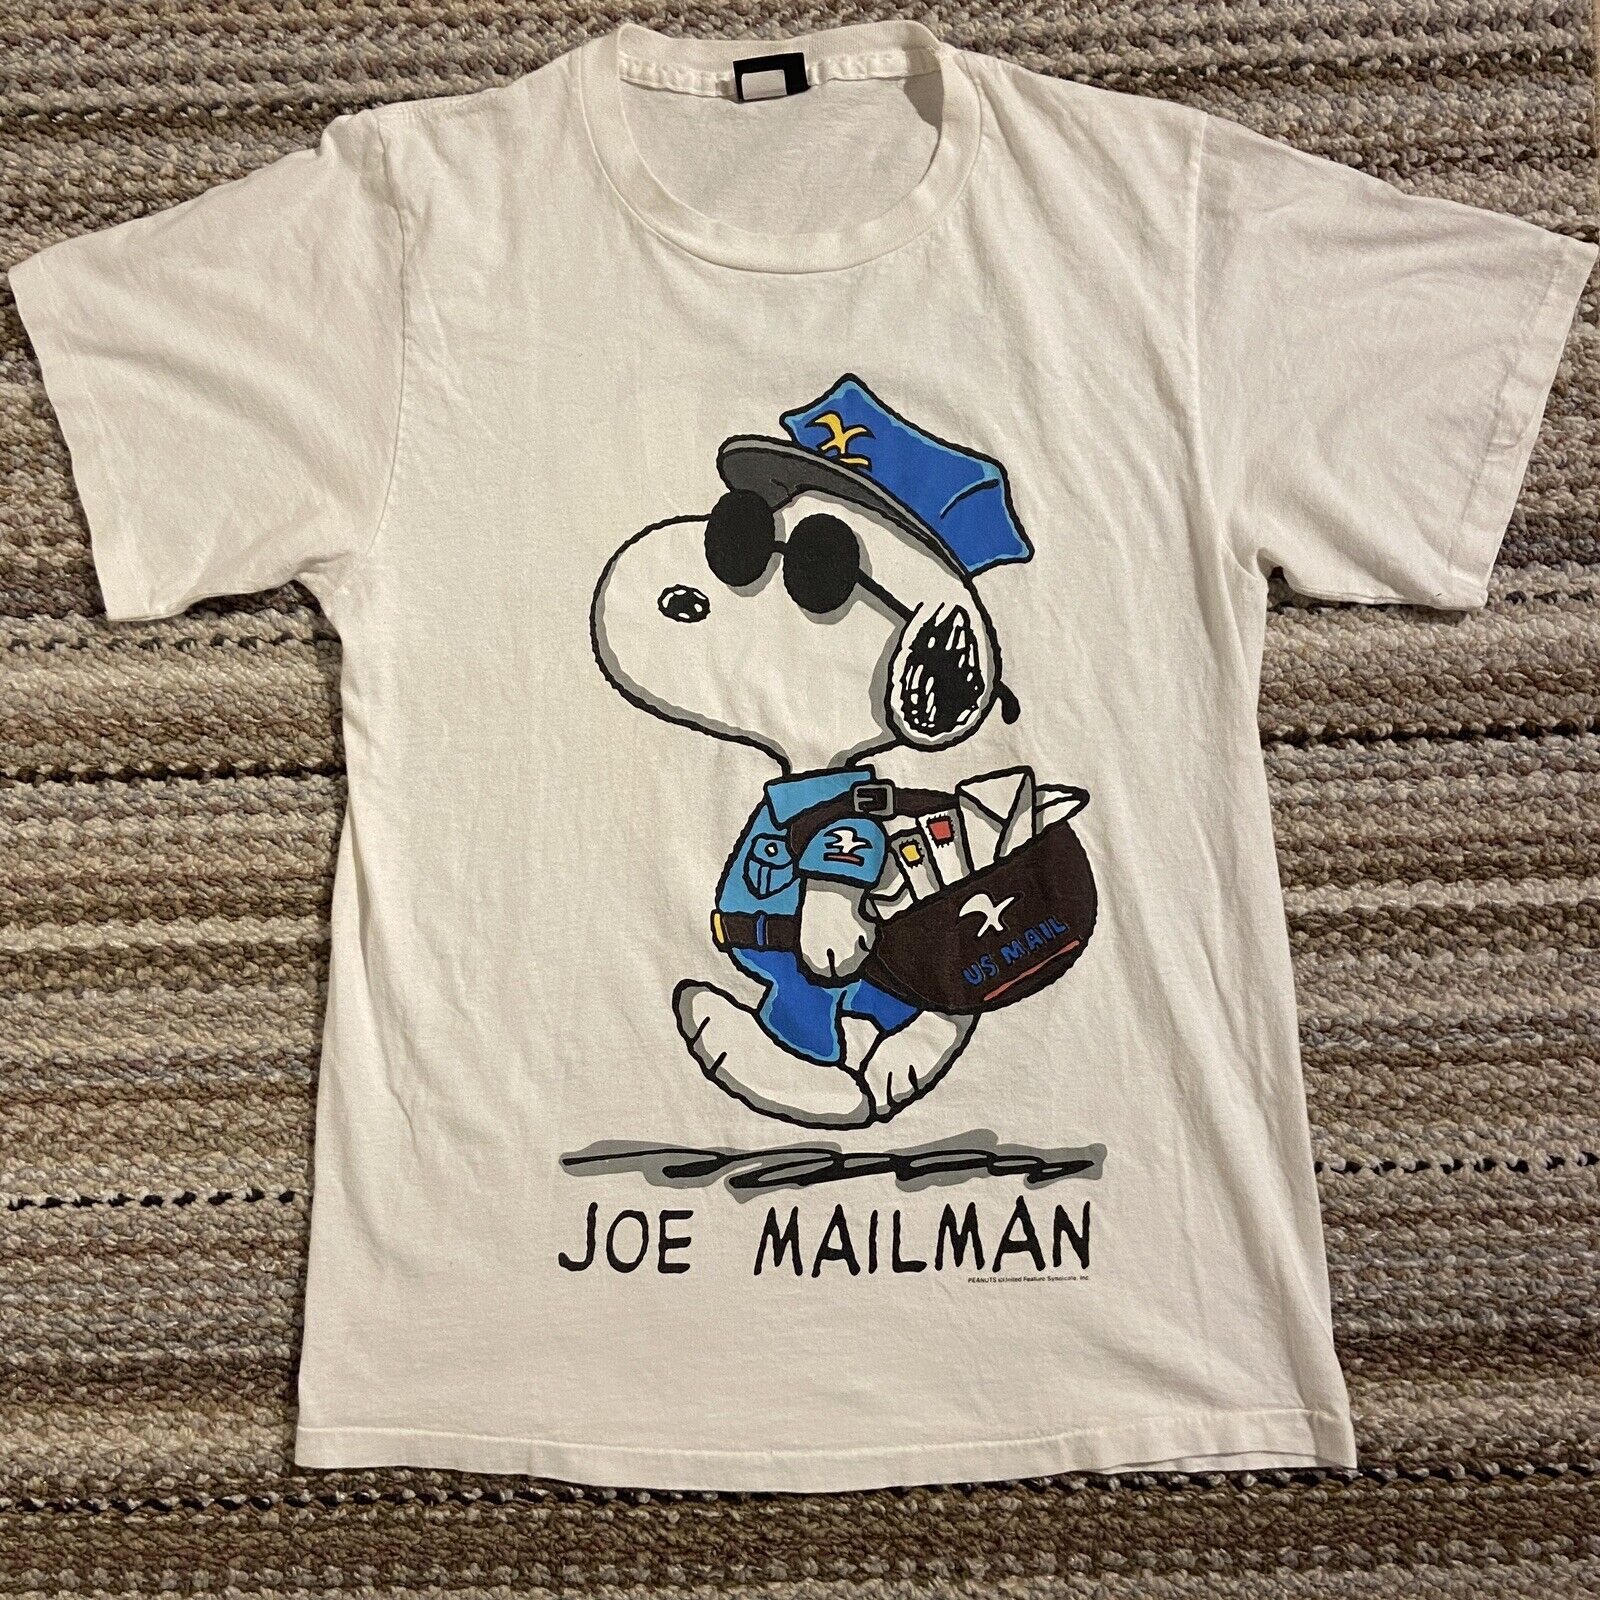 Vintage VTG 90s Peanuts Snoopy Joe Cool L Changes Tag Made In Usa Joe Mailman